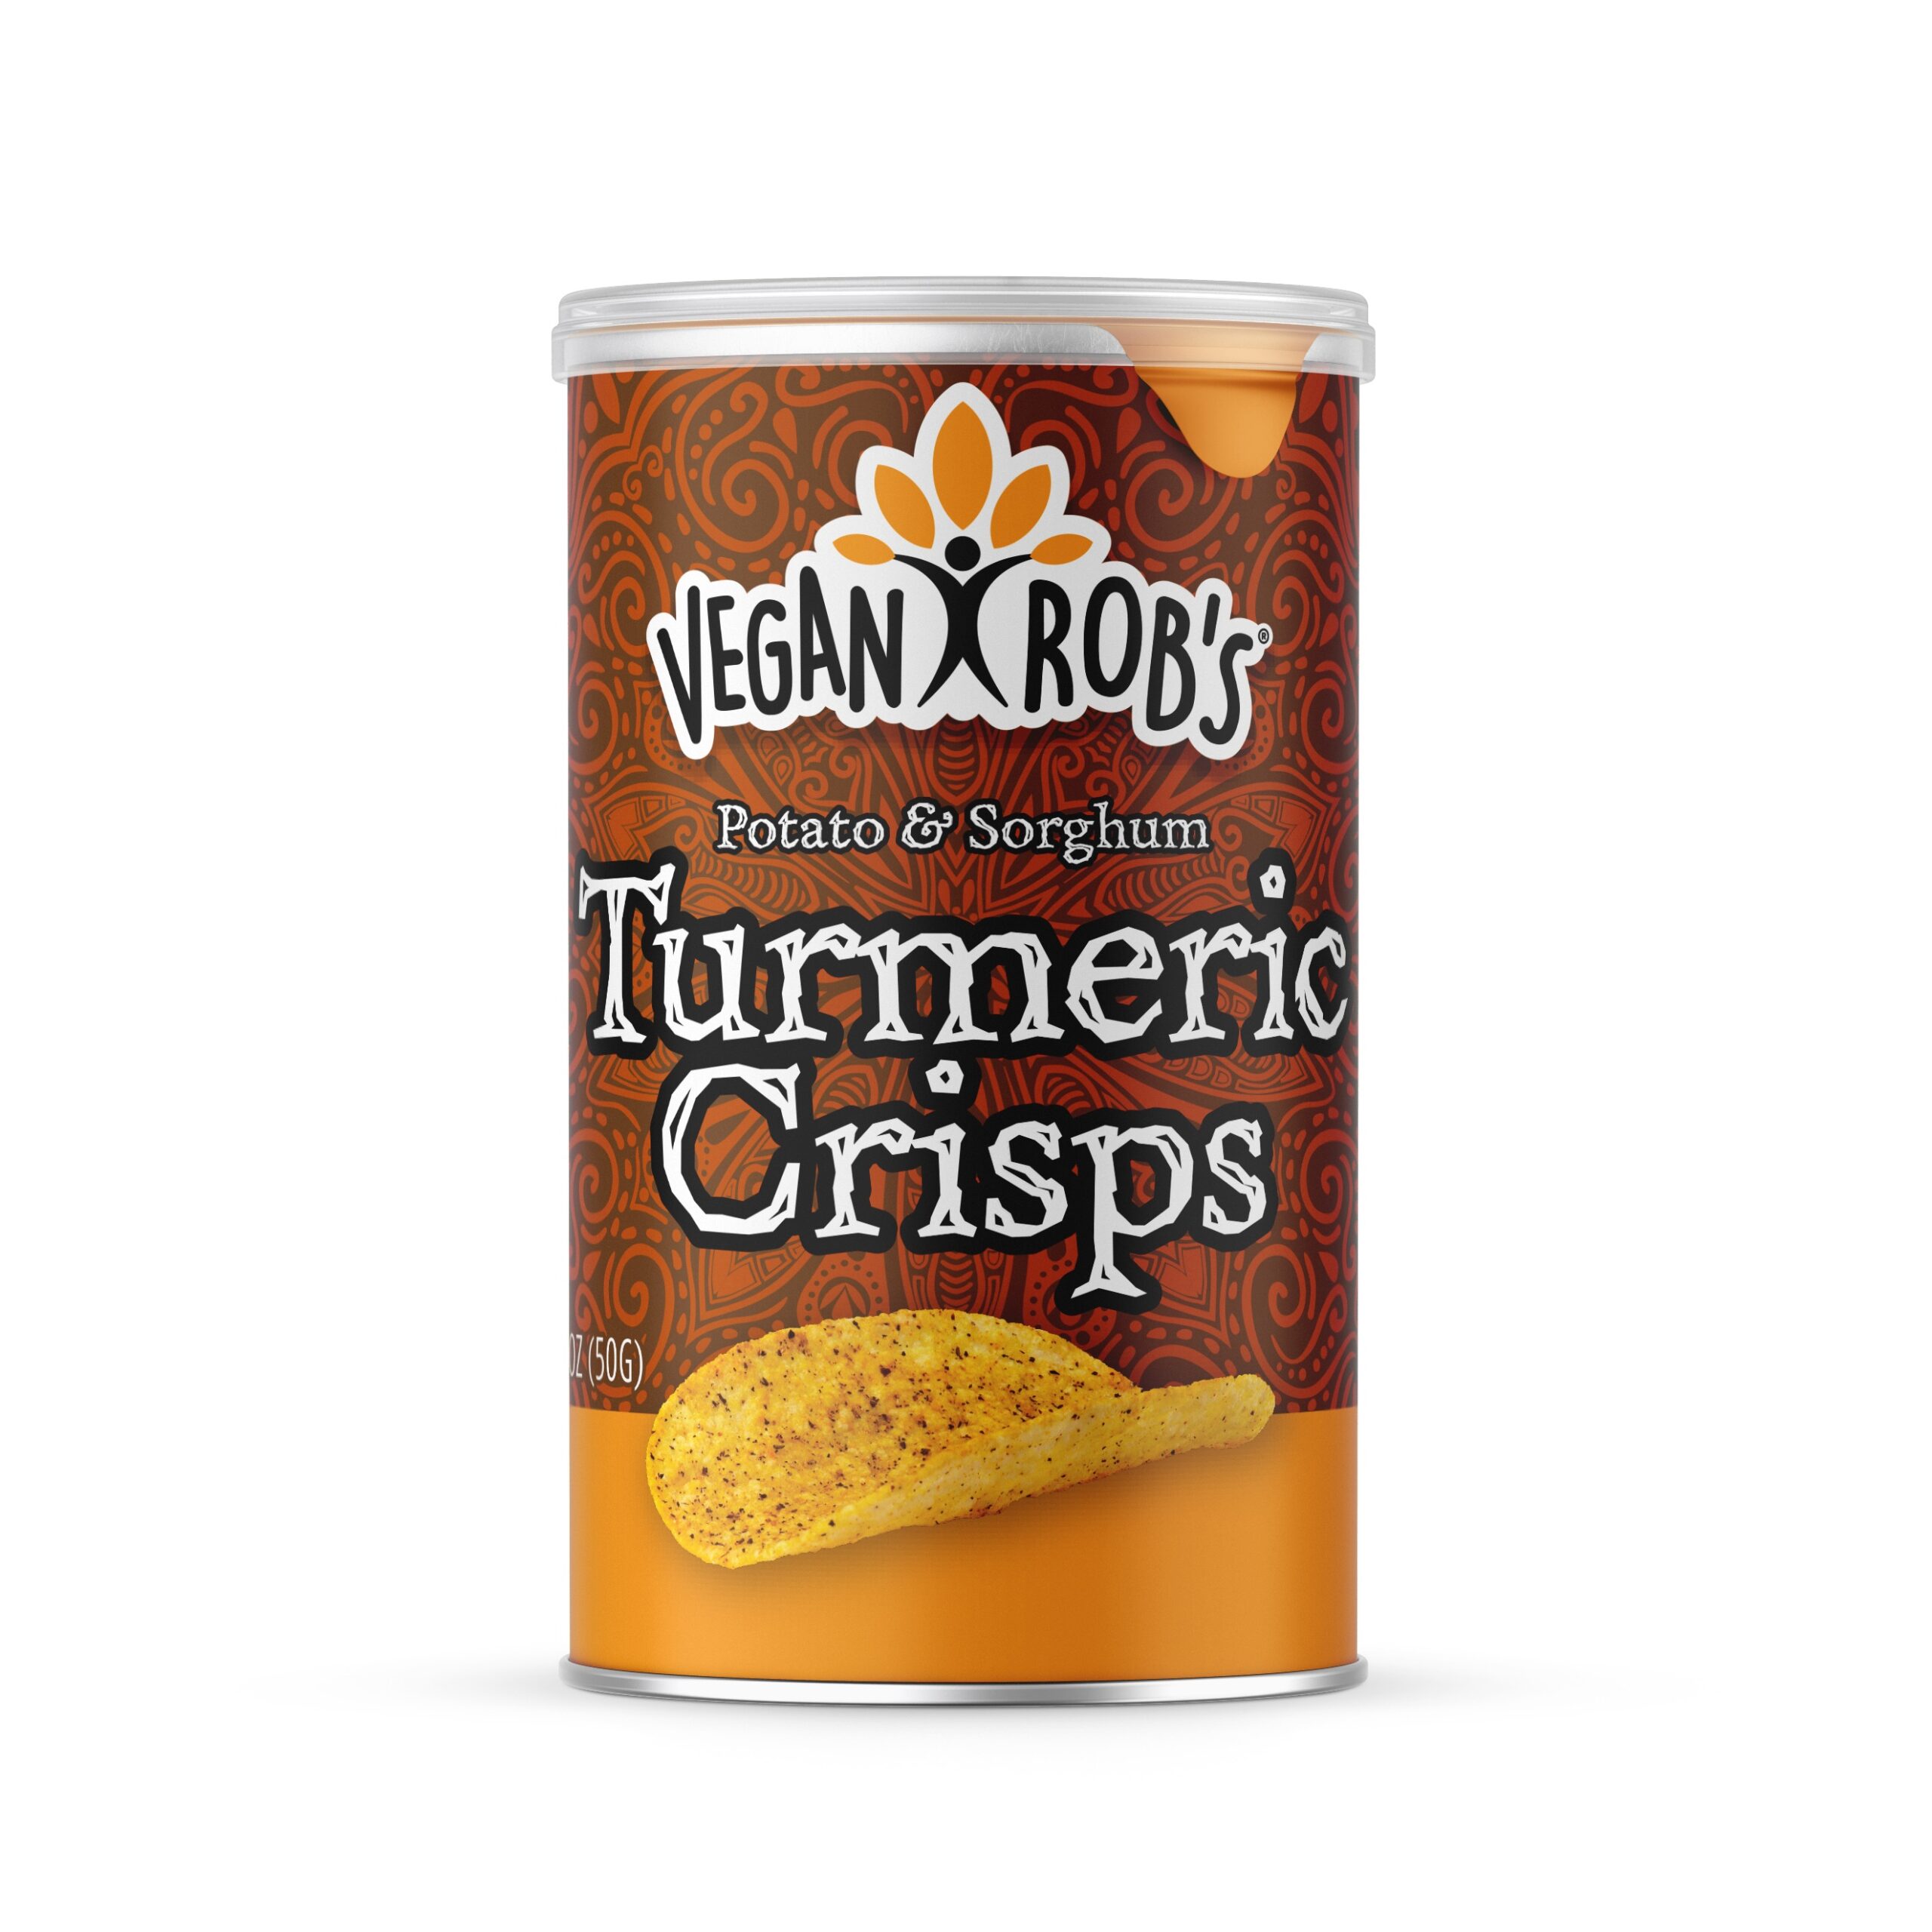 Vegan Rob's Turmeric Crisps